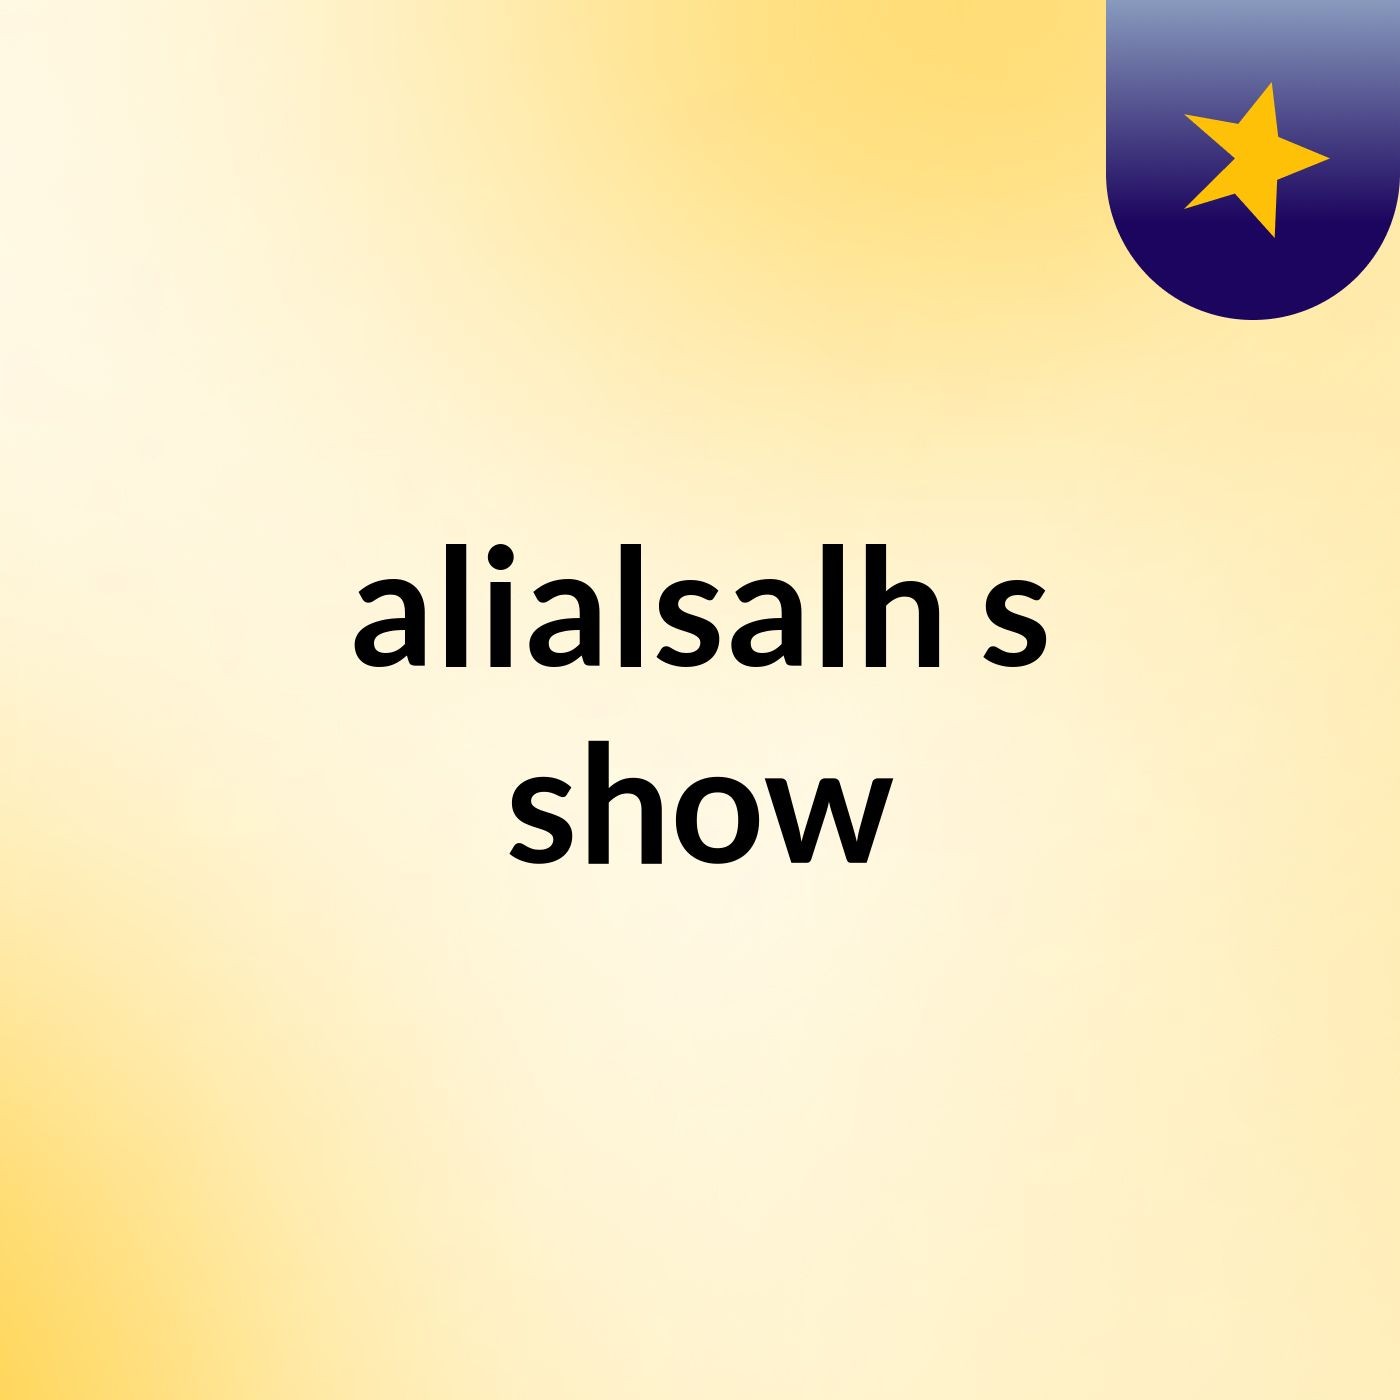 alialsalh's show